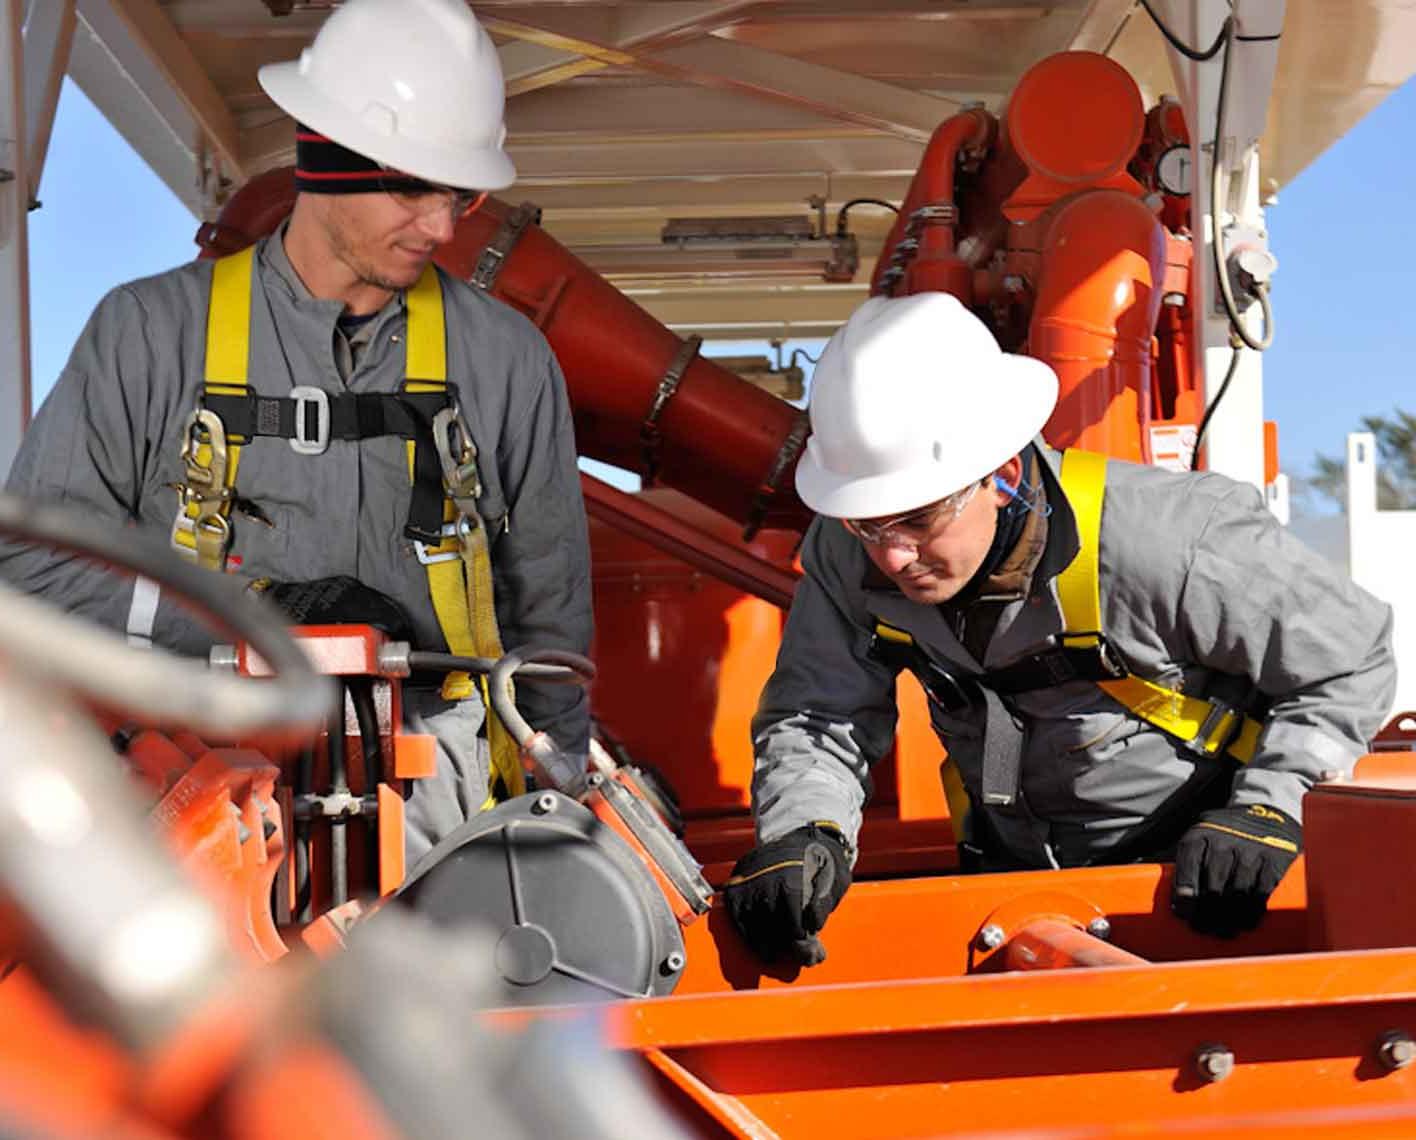 Drilling equipment and operators.